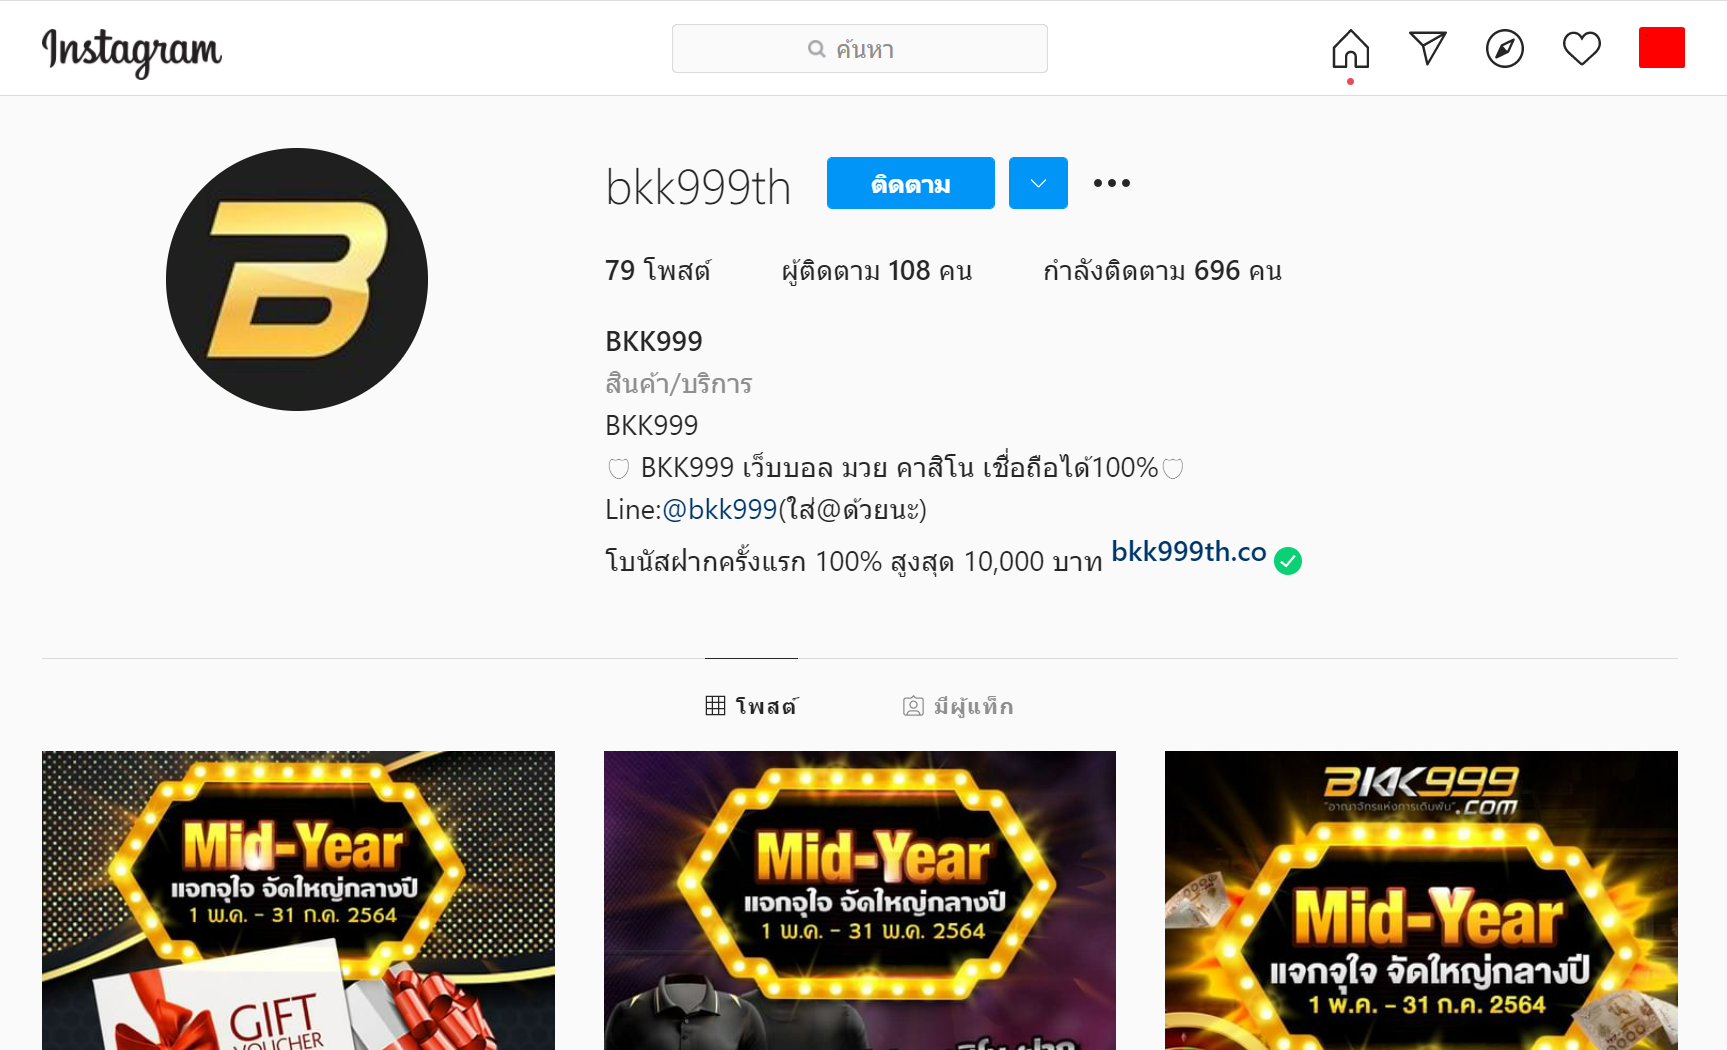 bkk999 instagram รีวิวเว็บพนันออนไลน์